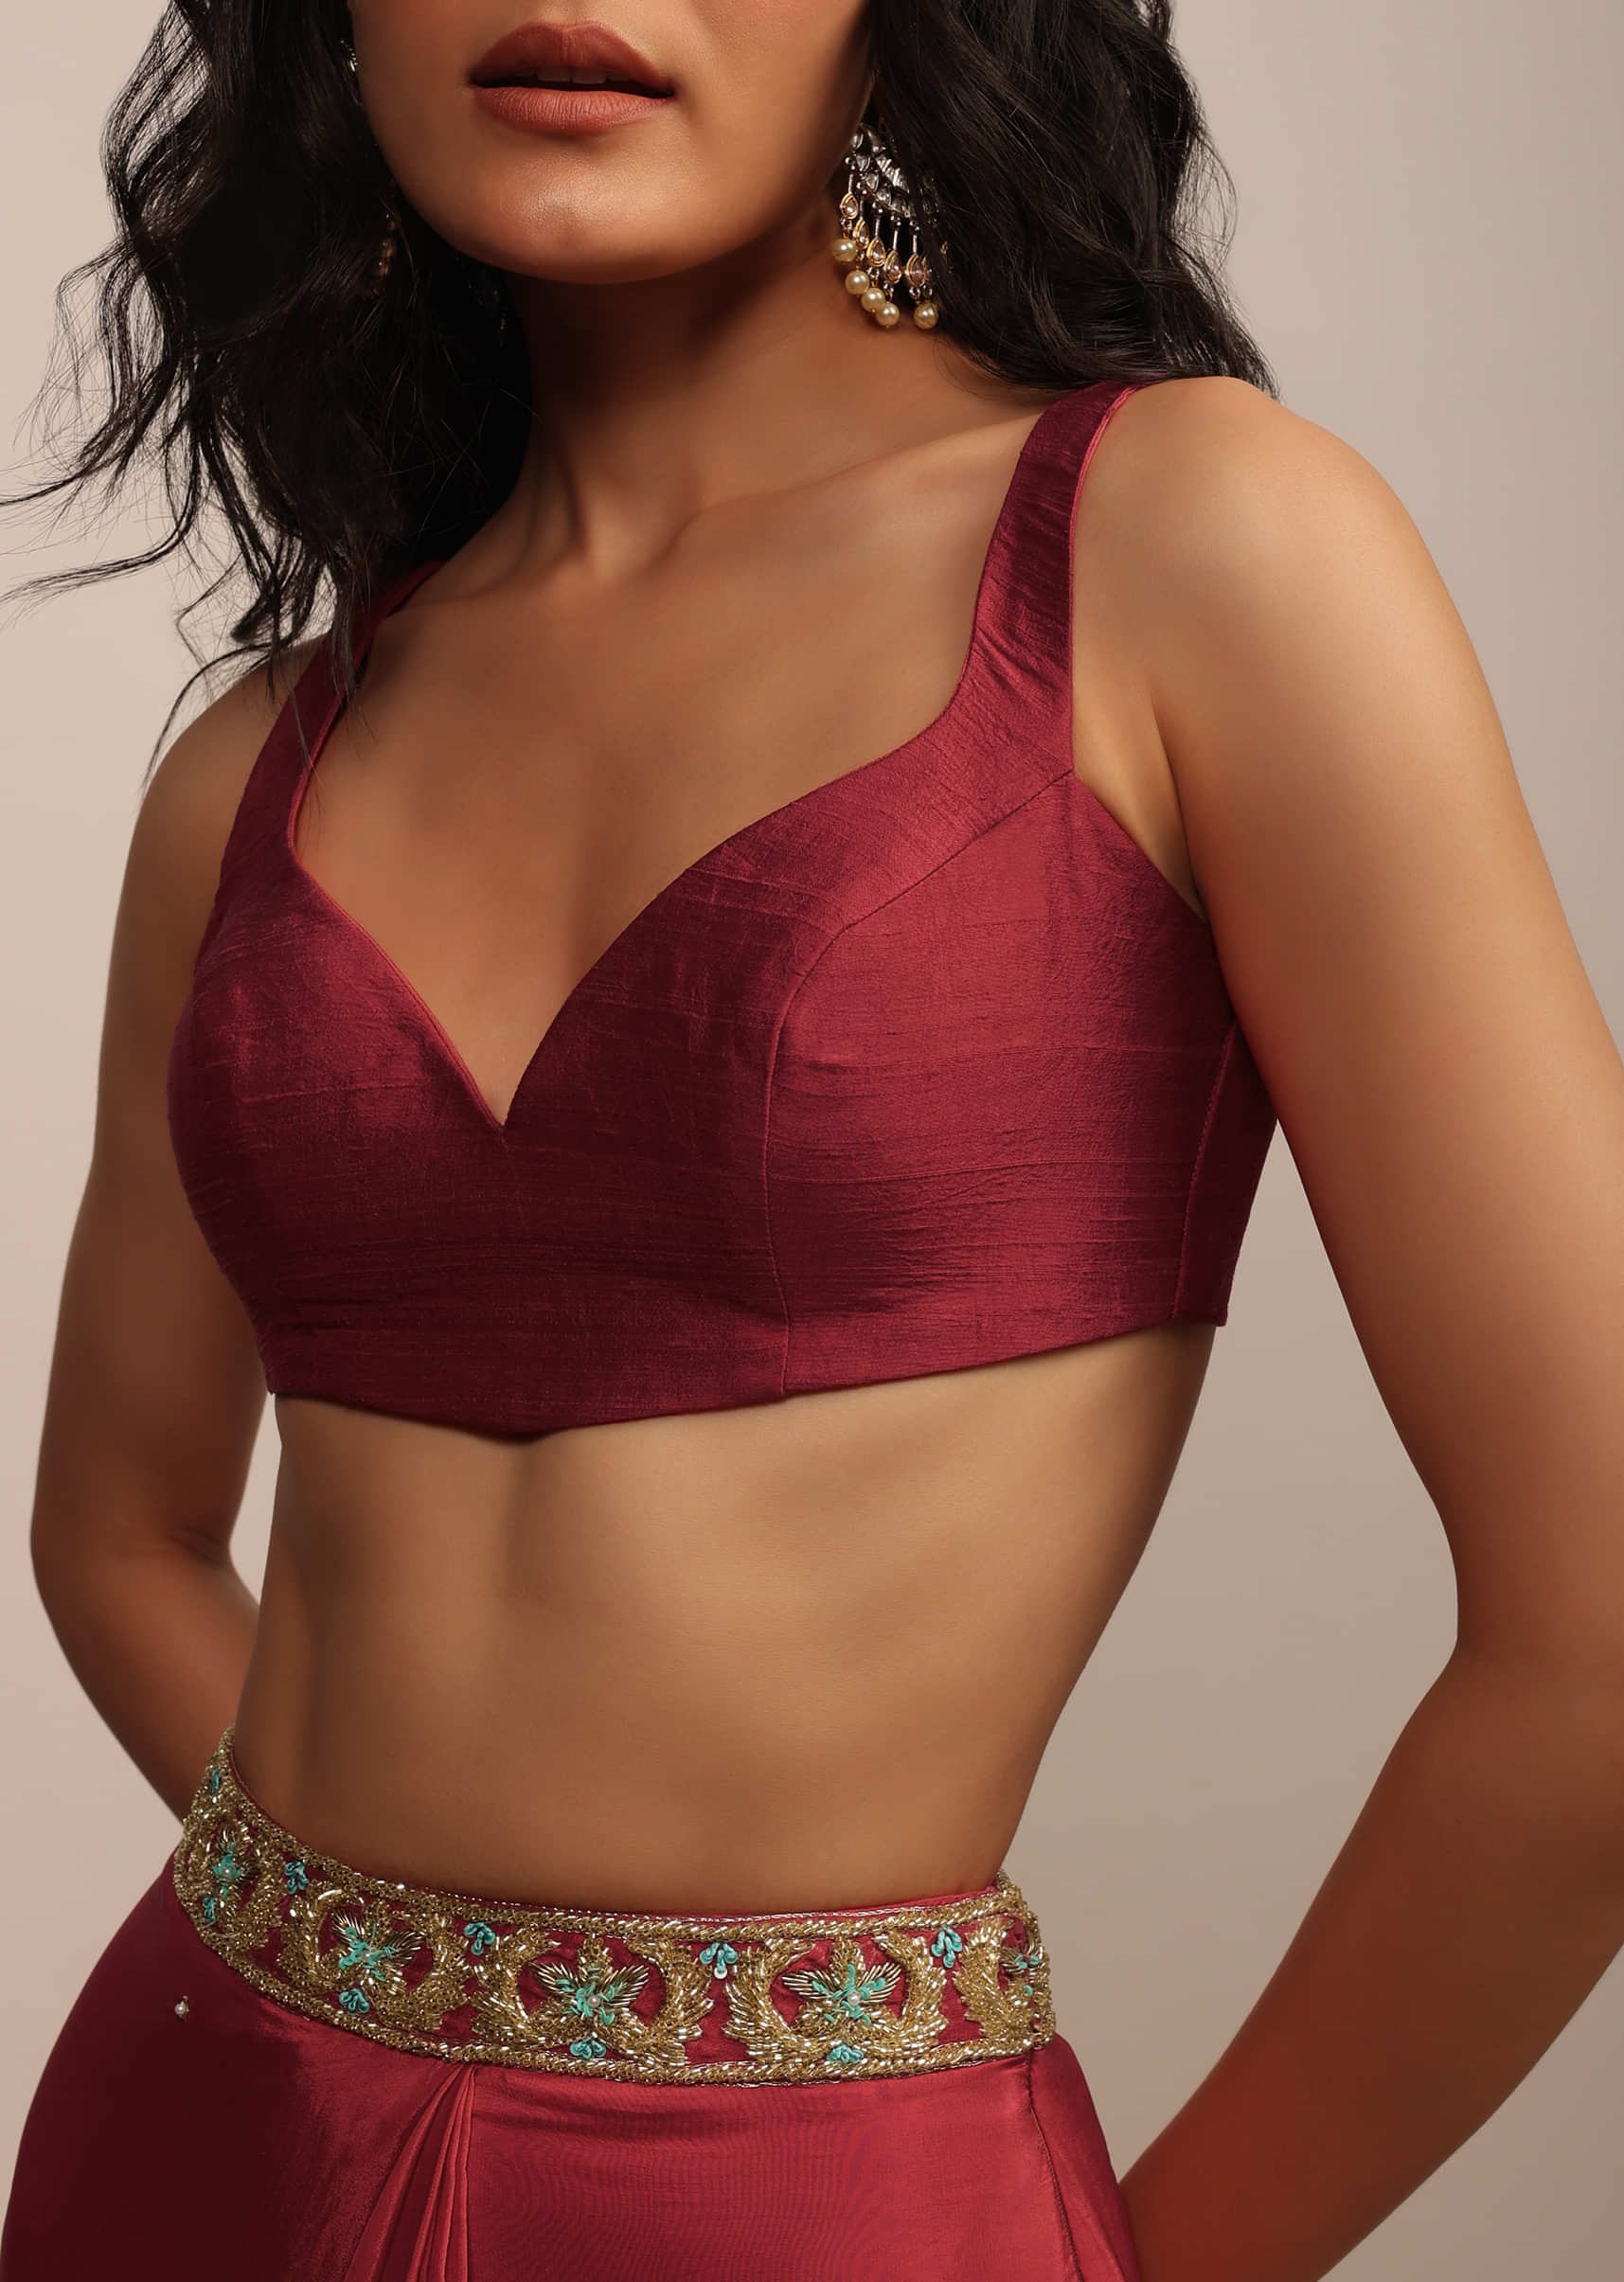 Buy Latest Saree Blouses (ब्लाउज) Designs Online